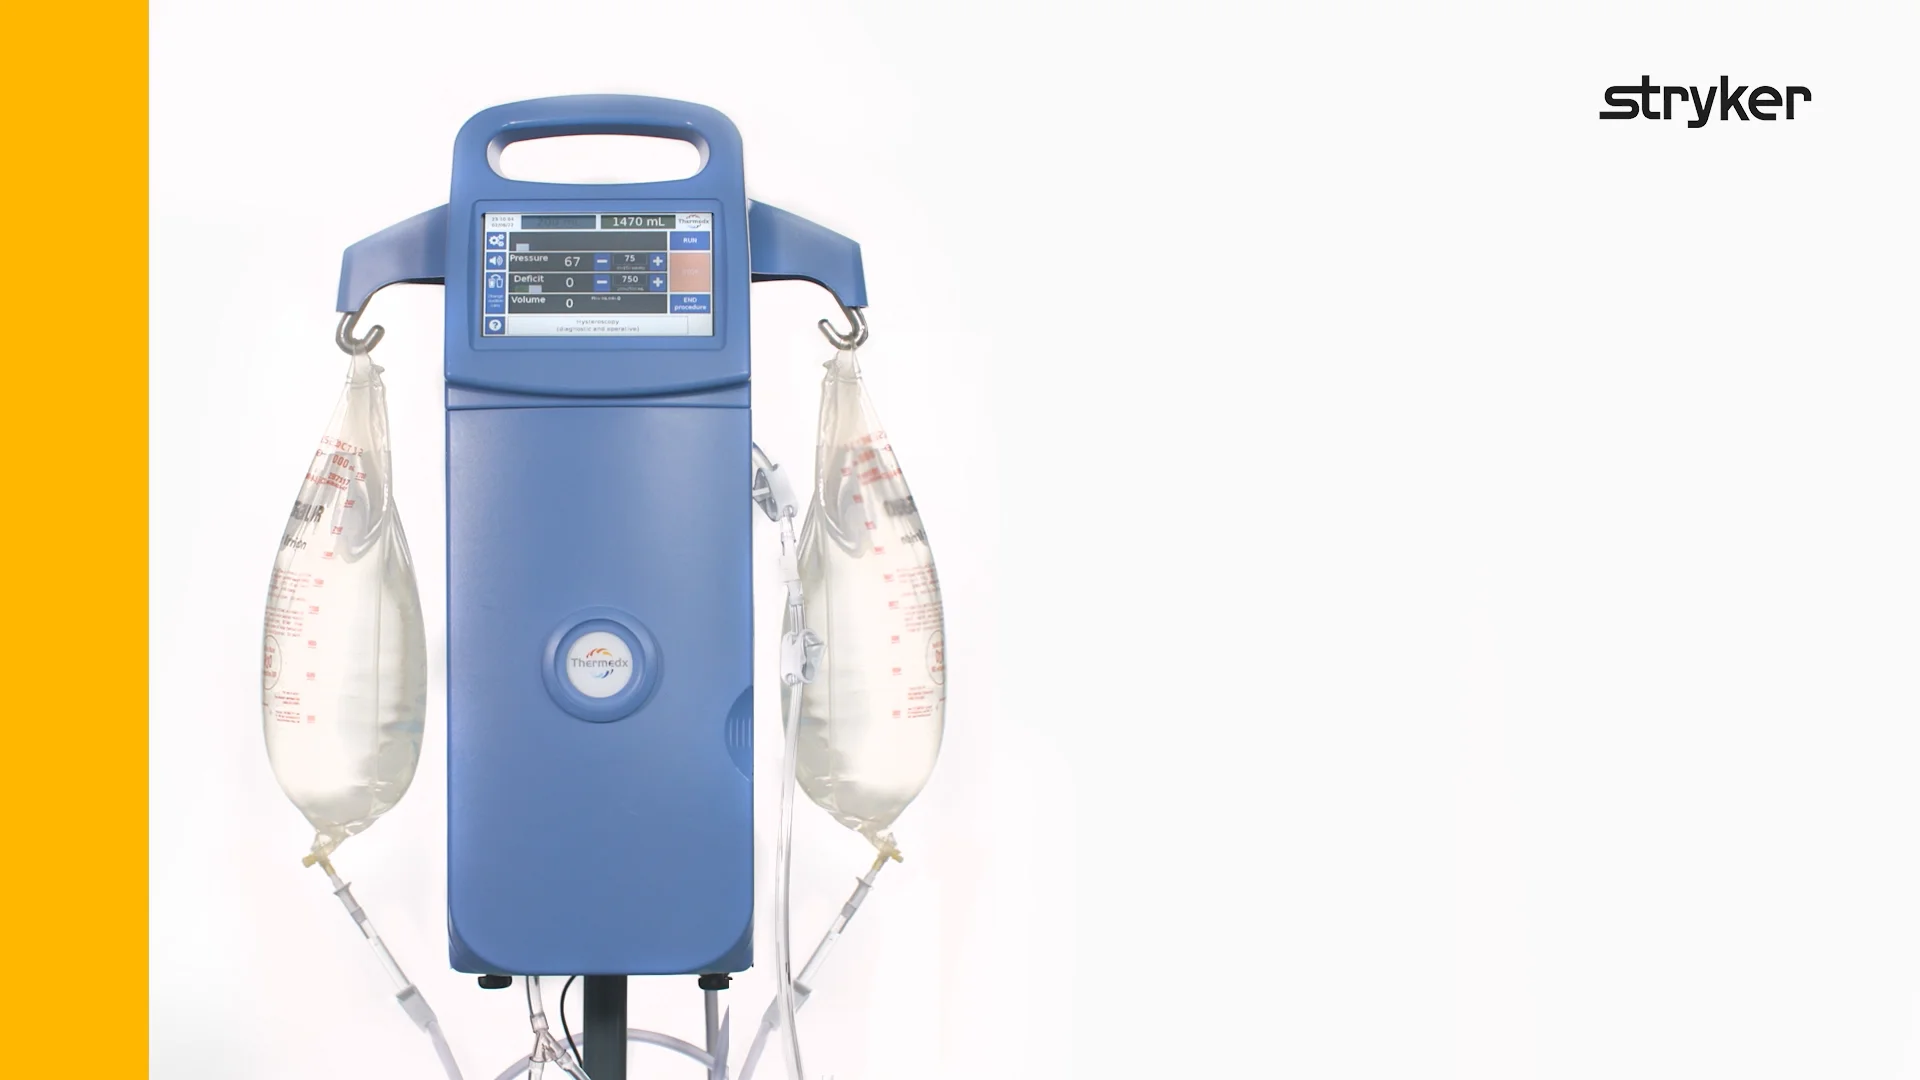 Automatic Digital Blood Pressure Monitor: MDS4001 on Vimeo